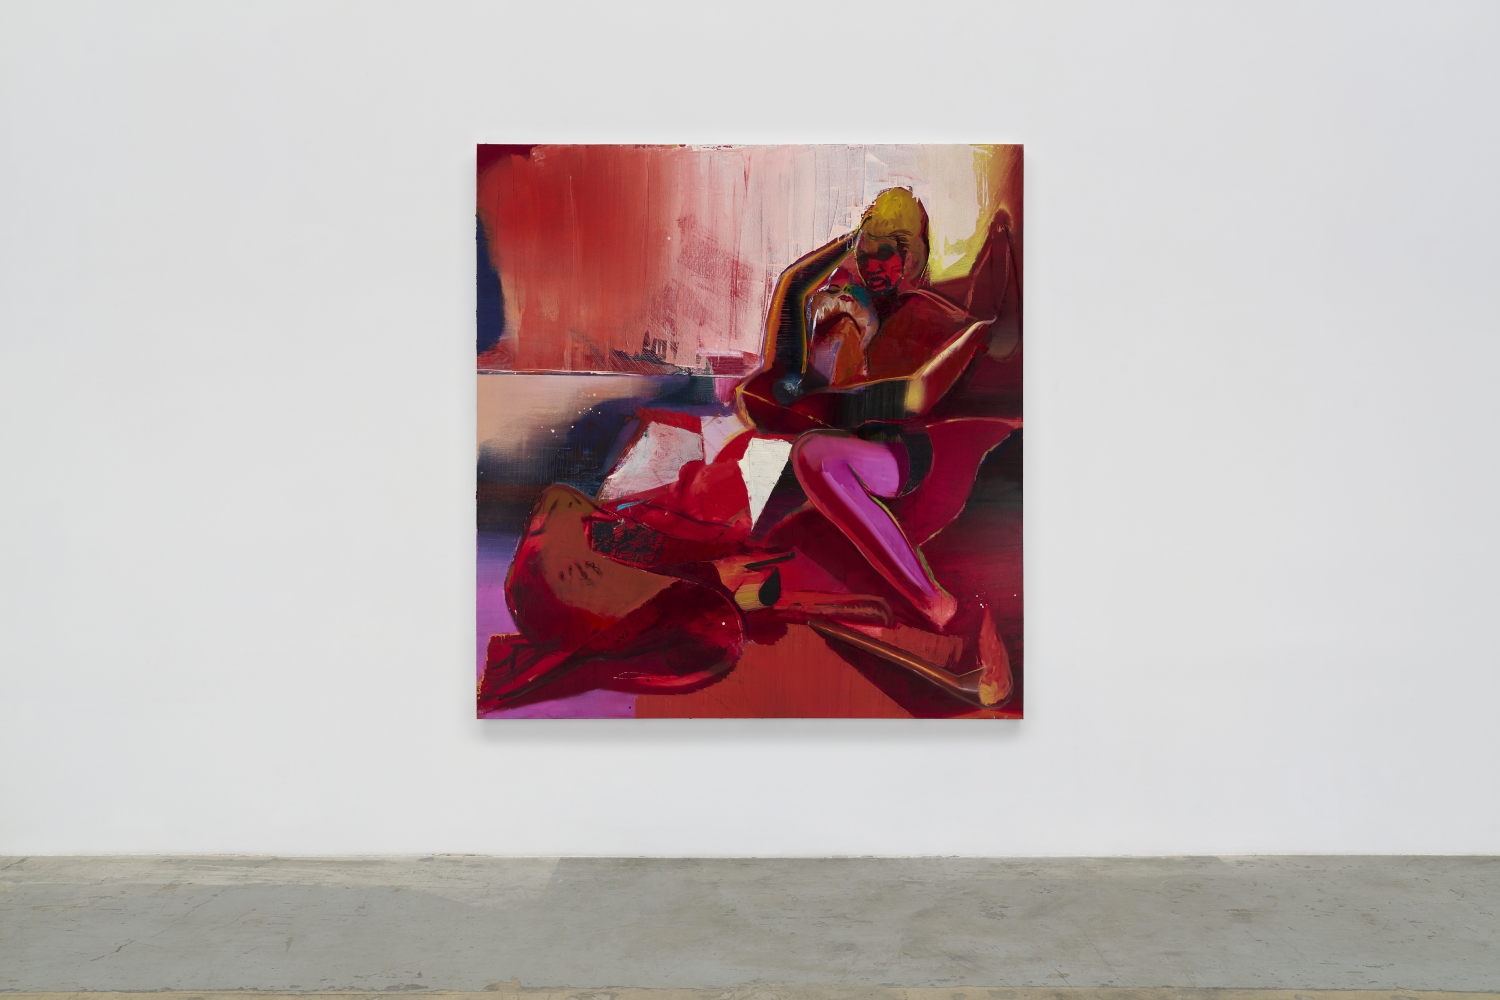 Katherina&amp;nbsp;Olschbaur
Lovers, 2021
oil on canvas
82.7 x 78.75 in
210 x 200 cm